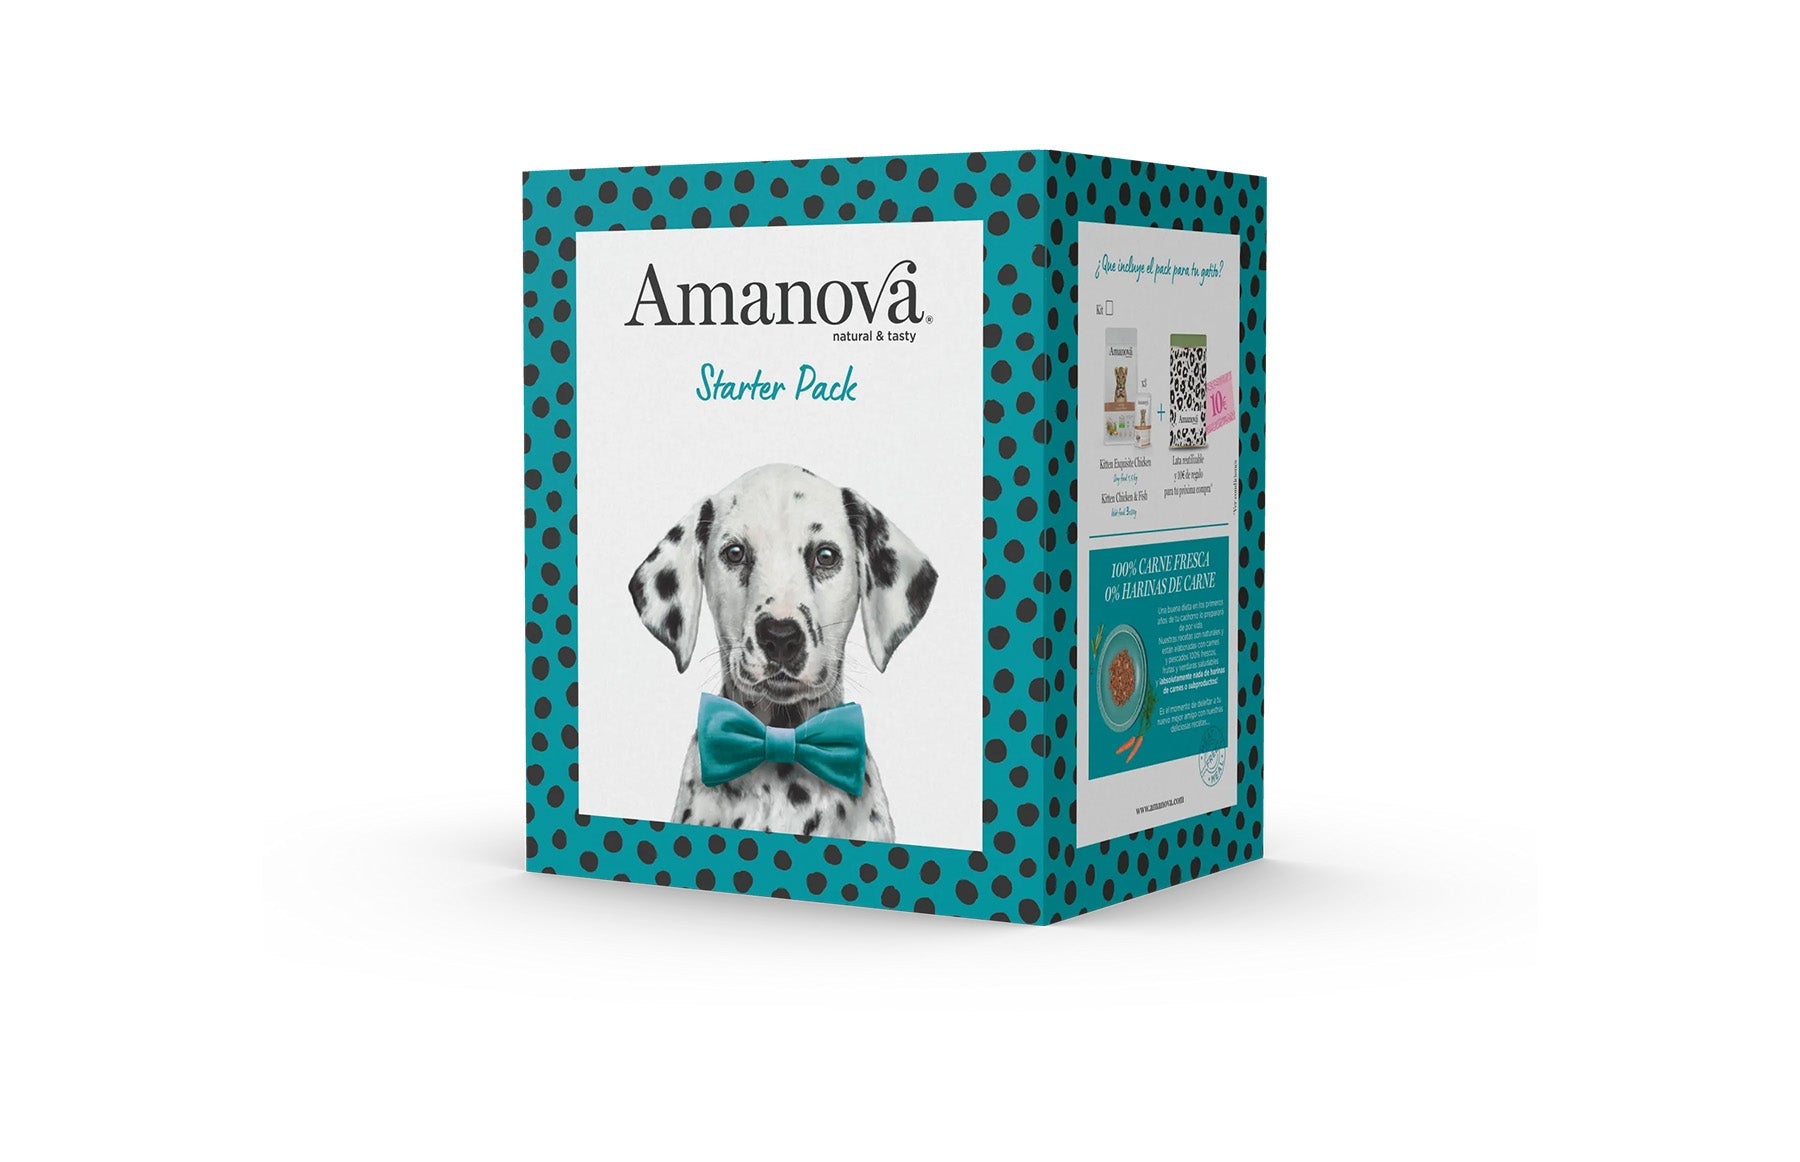 Amanova Starter Kit  - Puppy Digestive - Divine Rabbit